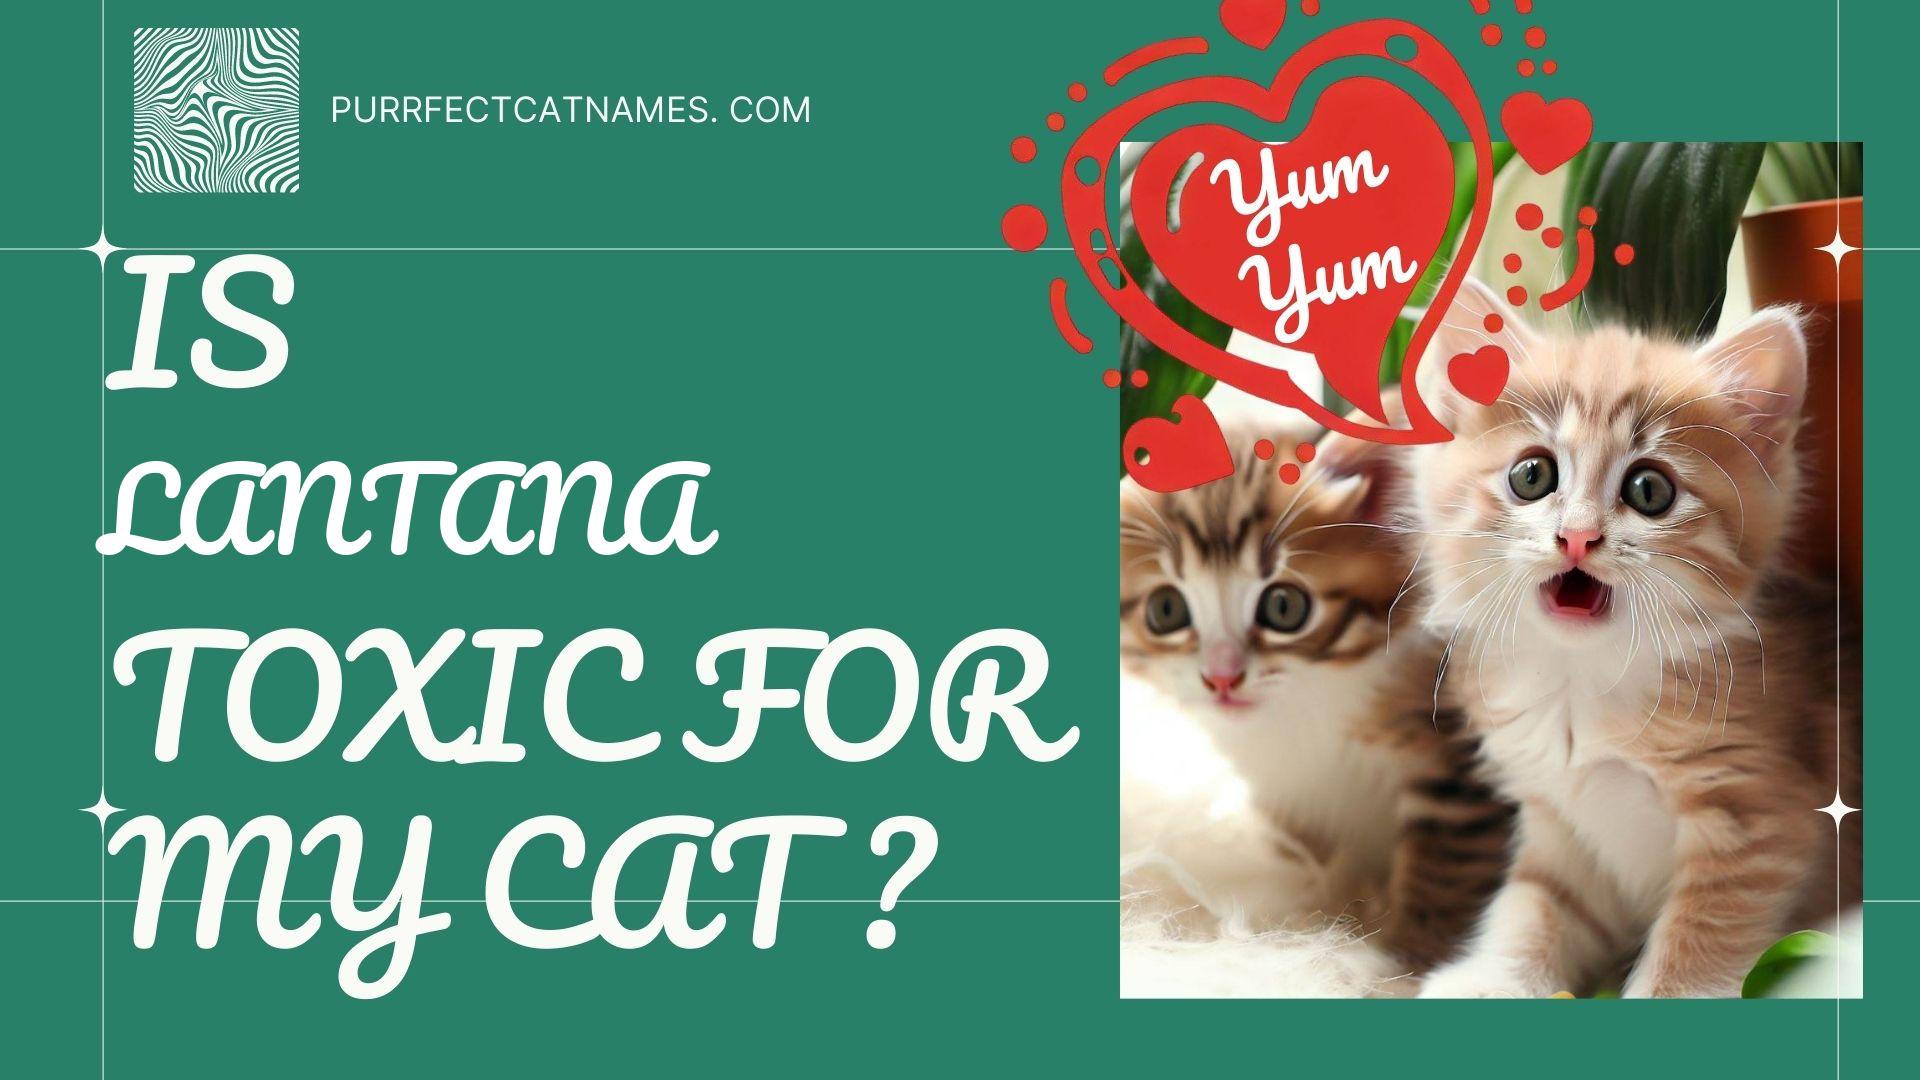 IsLantana plant toxic for your cat